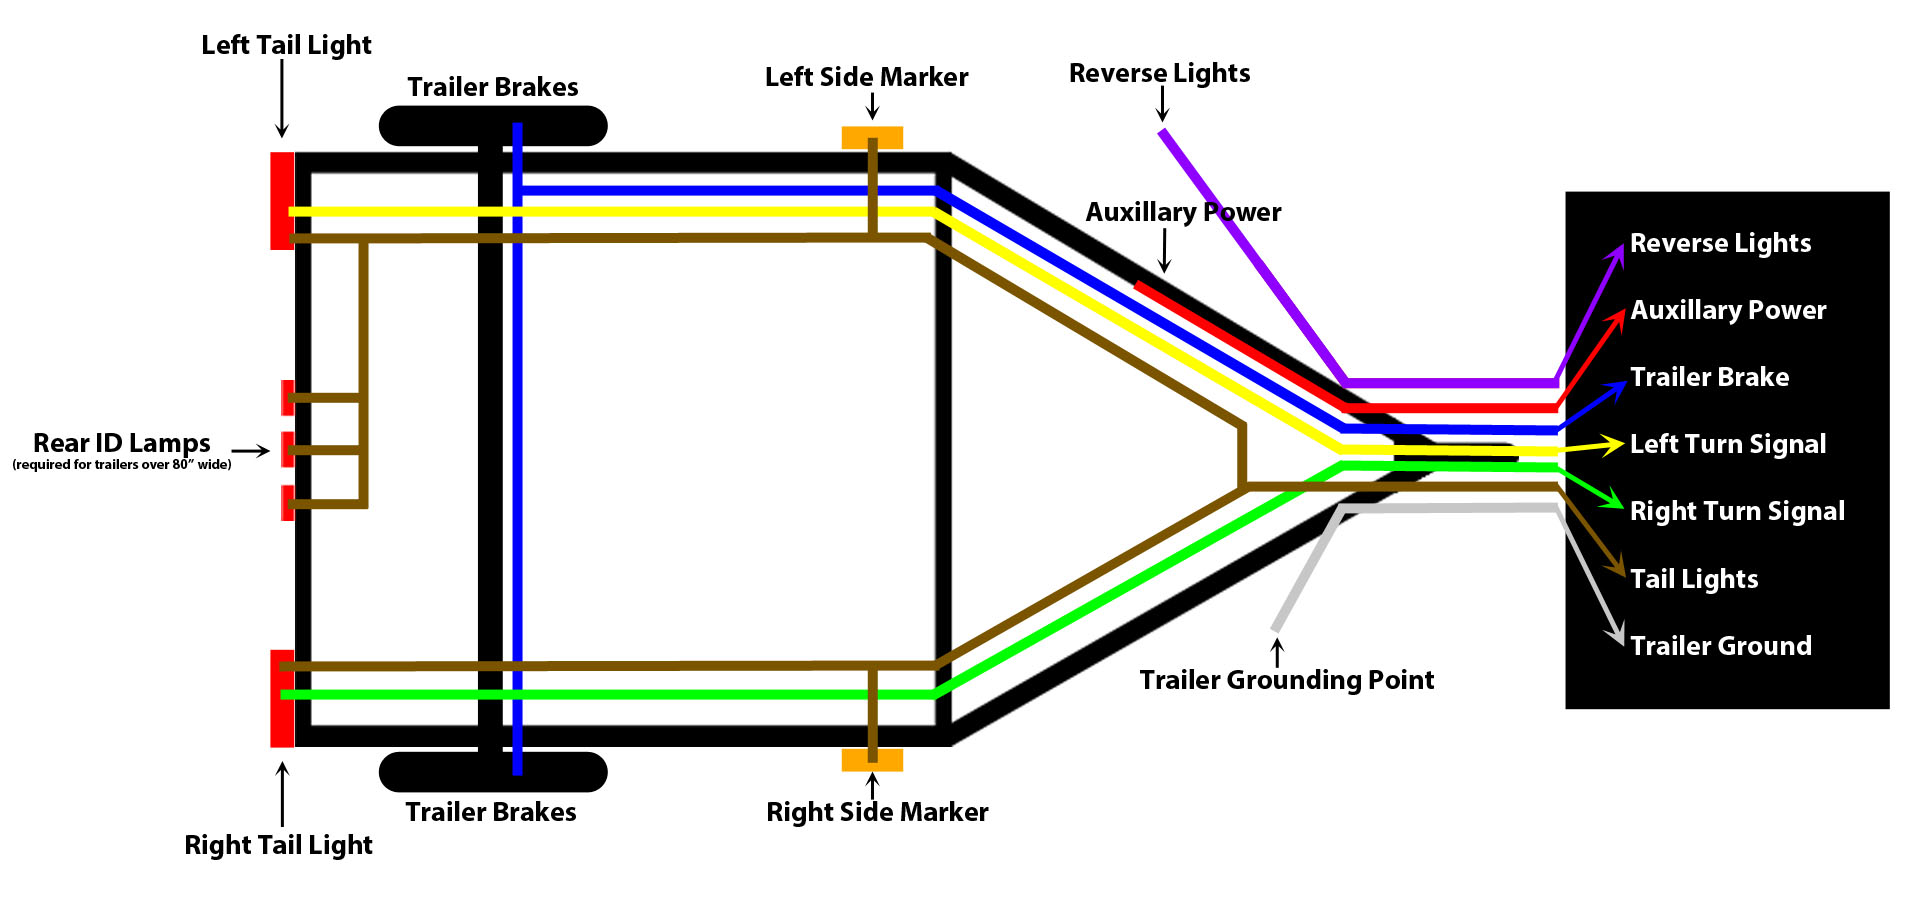 Trailer Marker Light Wiring Diagram from www.therangerstation.com